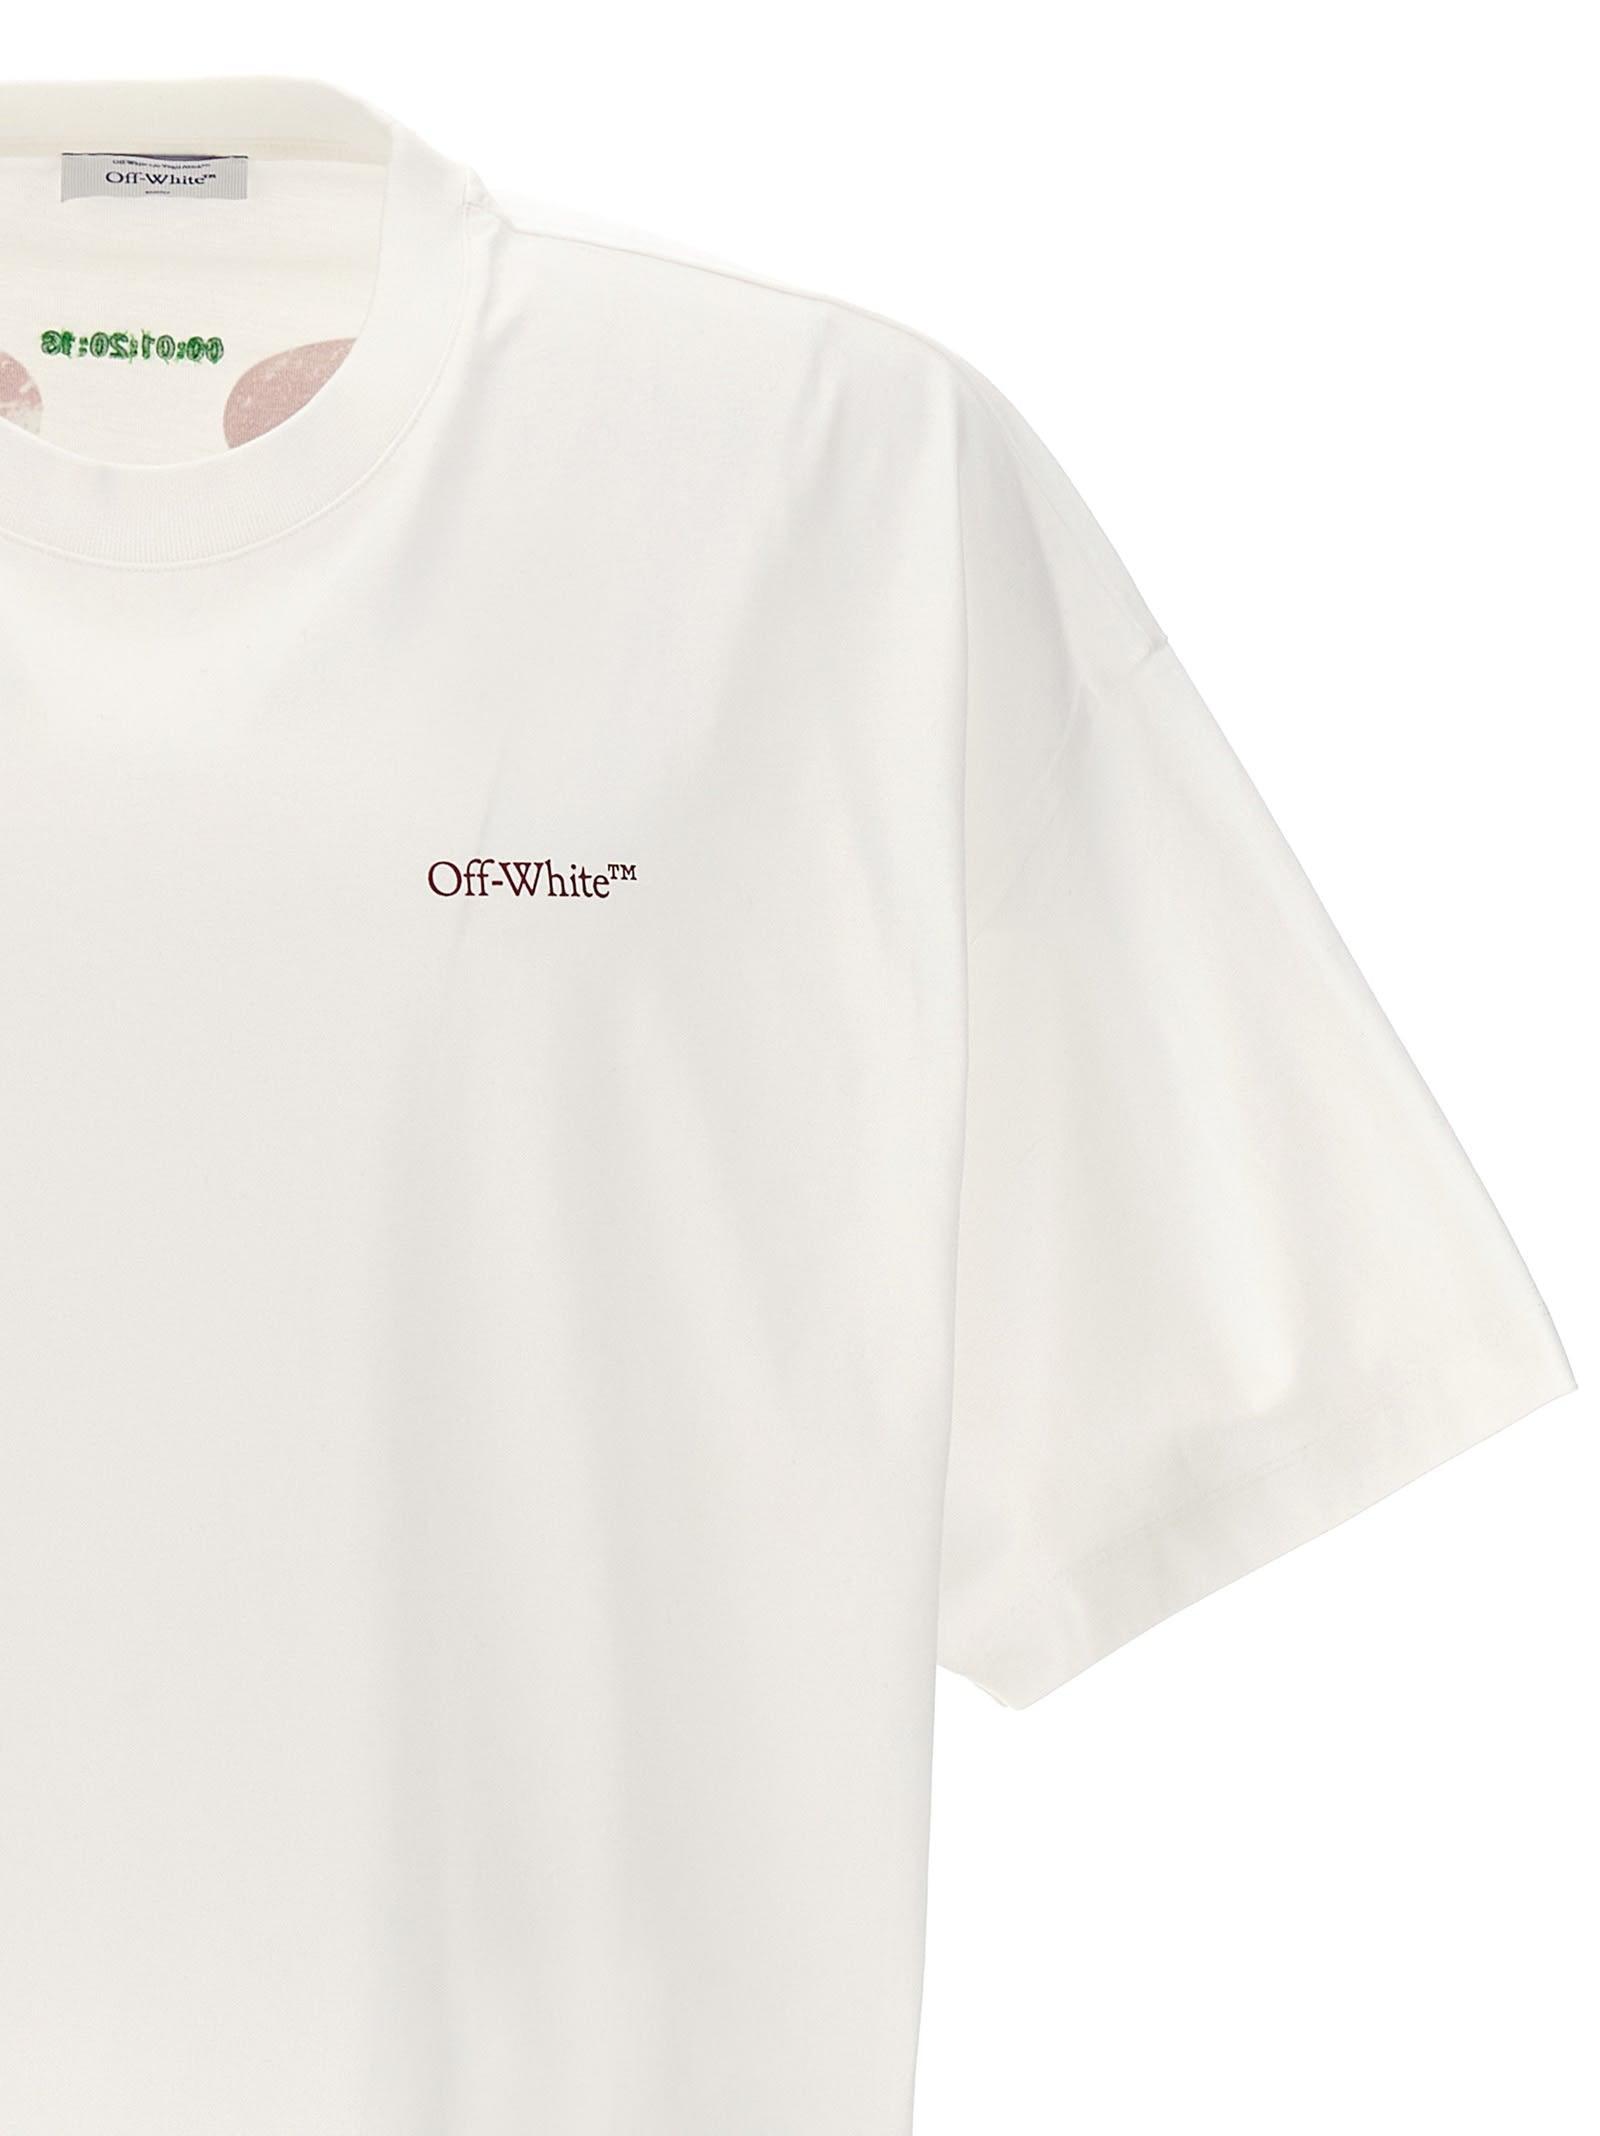 Off-White Double Moon Arrow T-Shirt